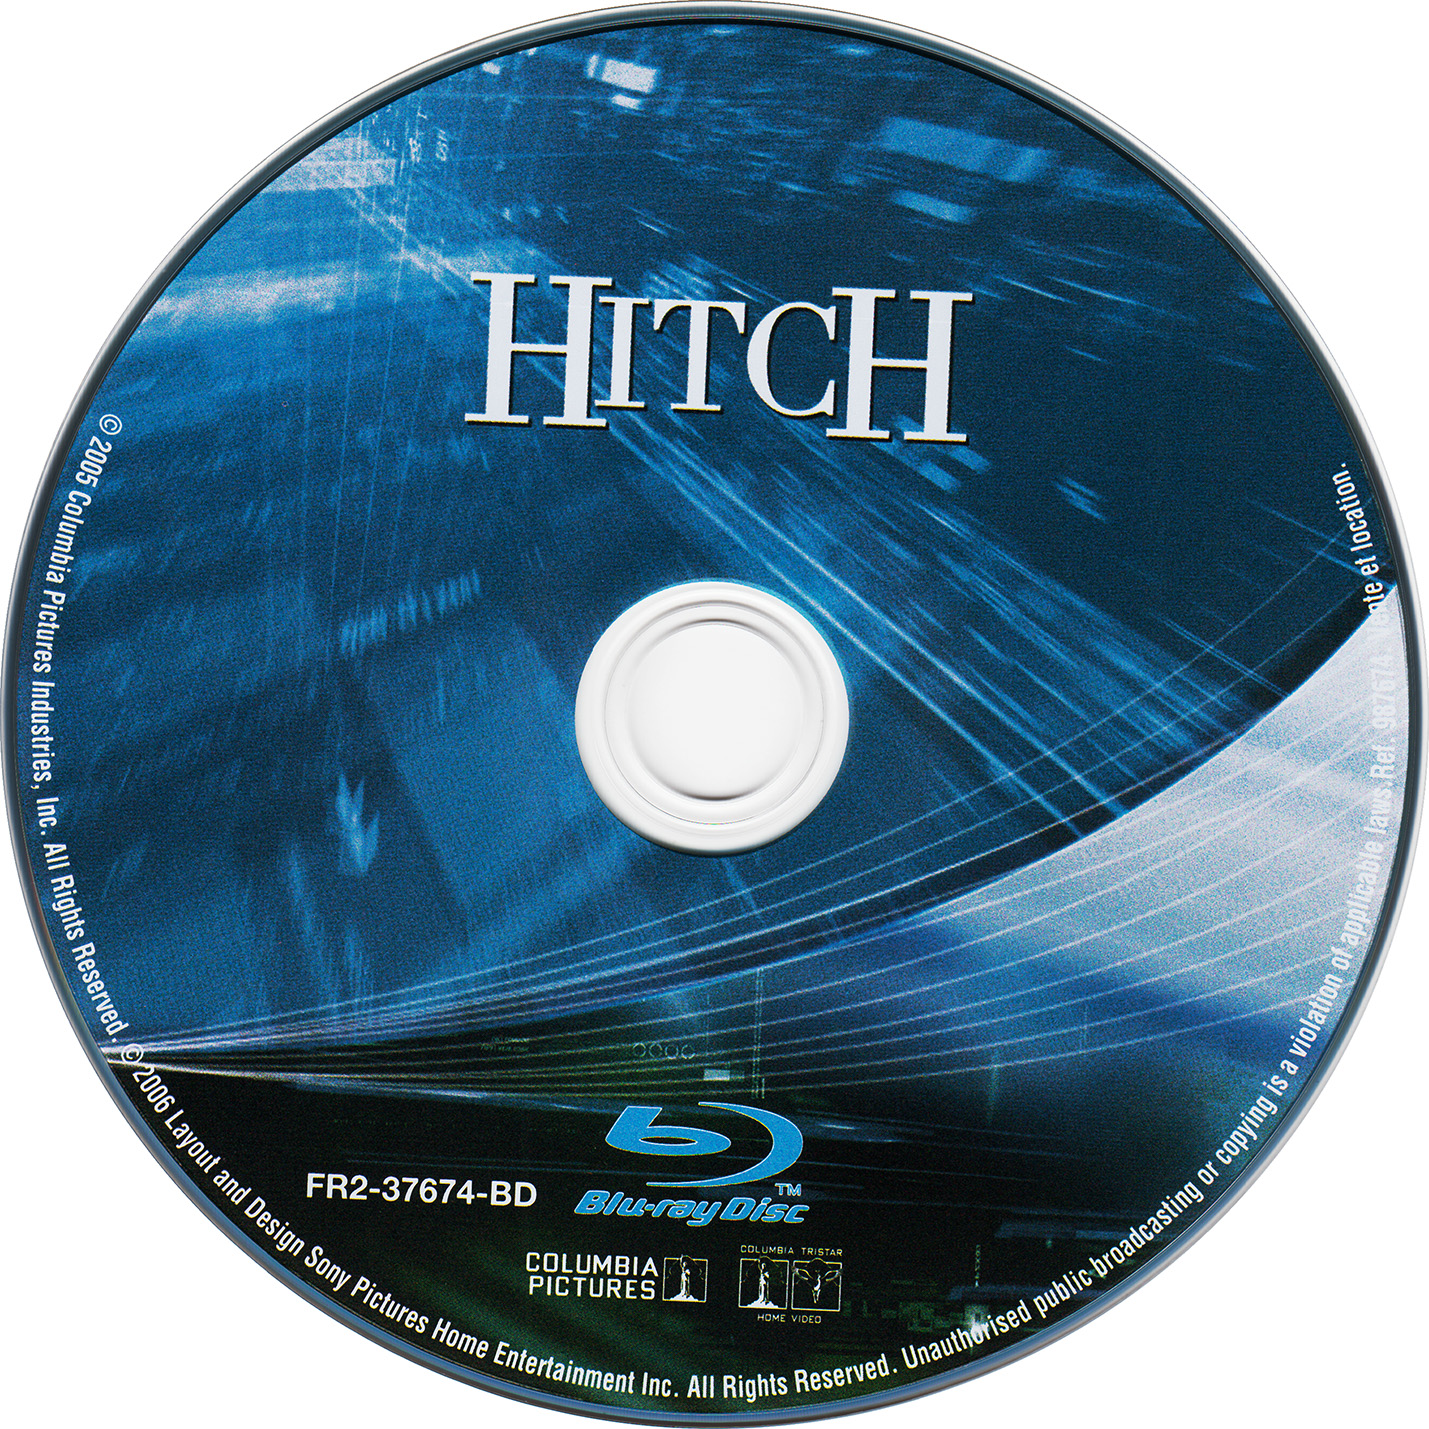 Hitch (BLU-RAY)